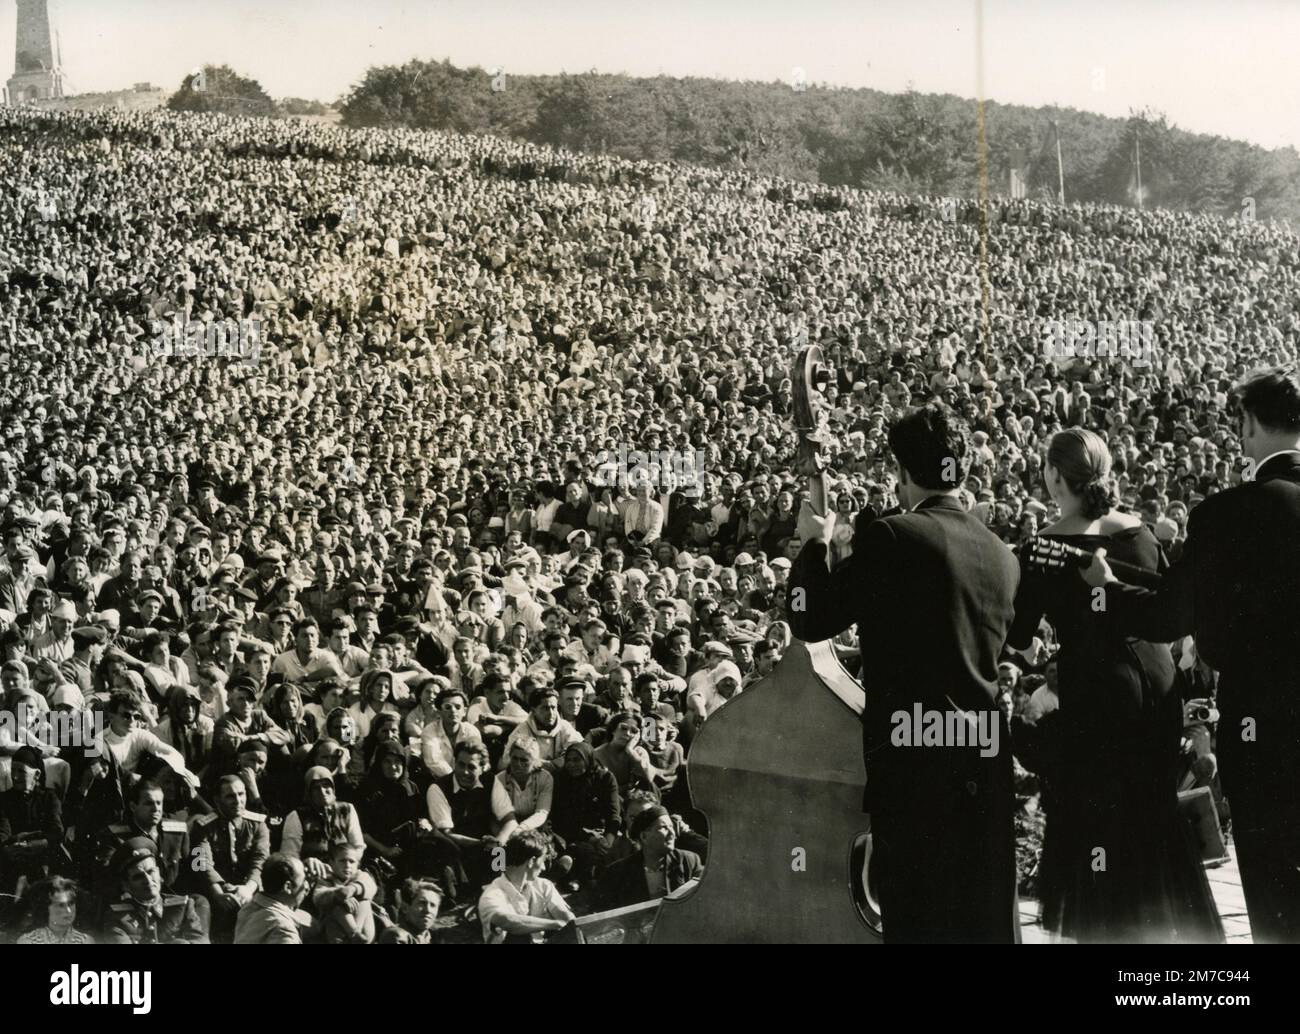 Crowd of people gathered at St. Nikolas (Shipka) Peak, Bulgaria, 1960s Stock Photo